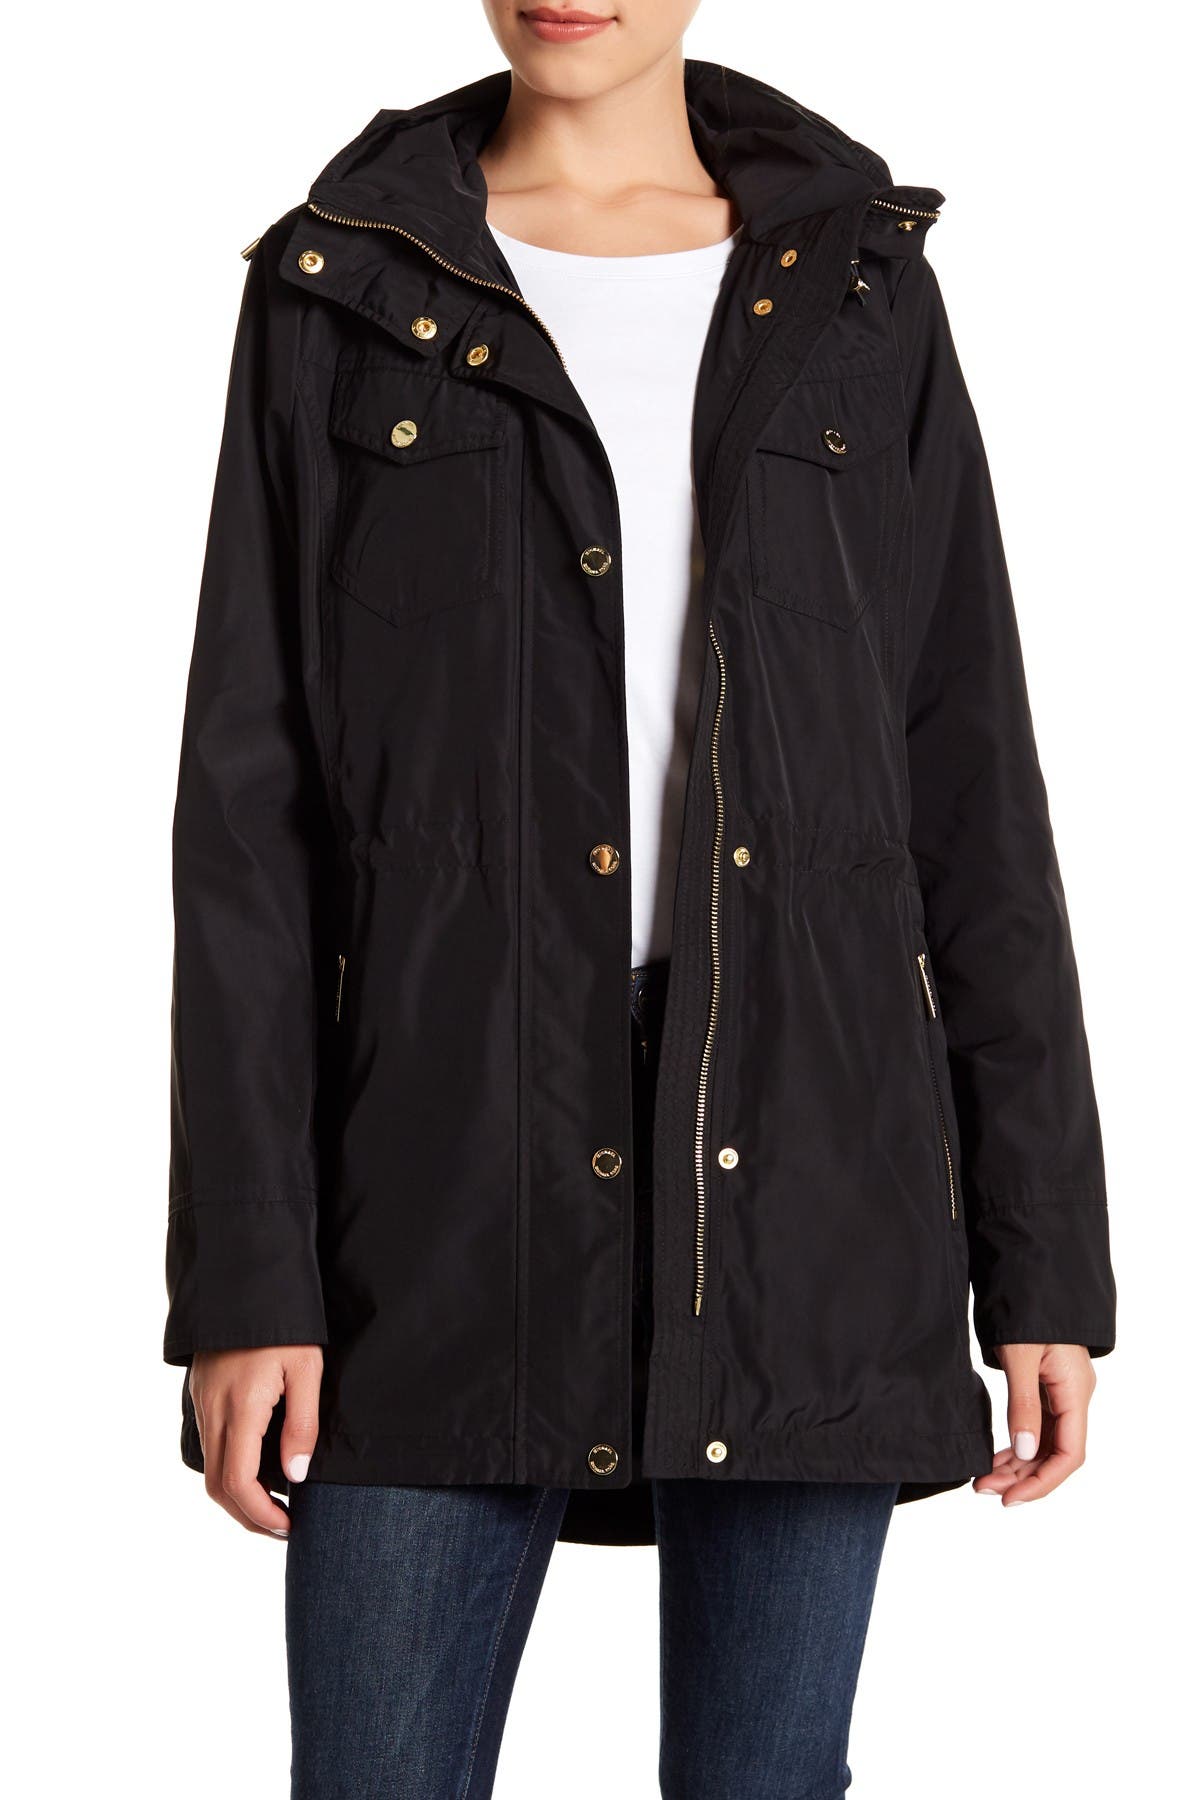 michael kors black raincoat